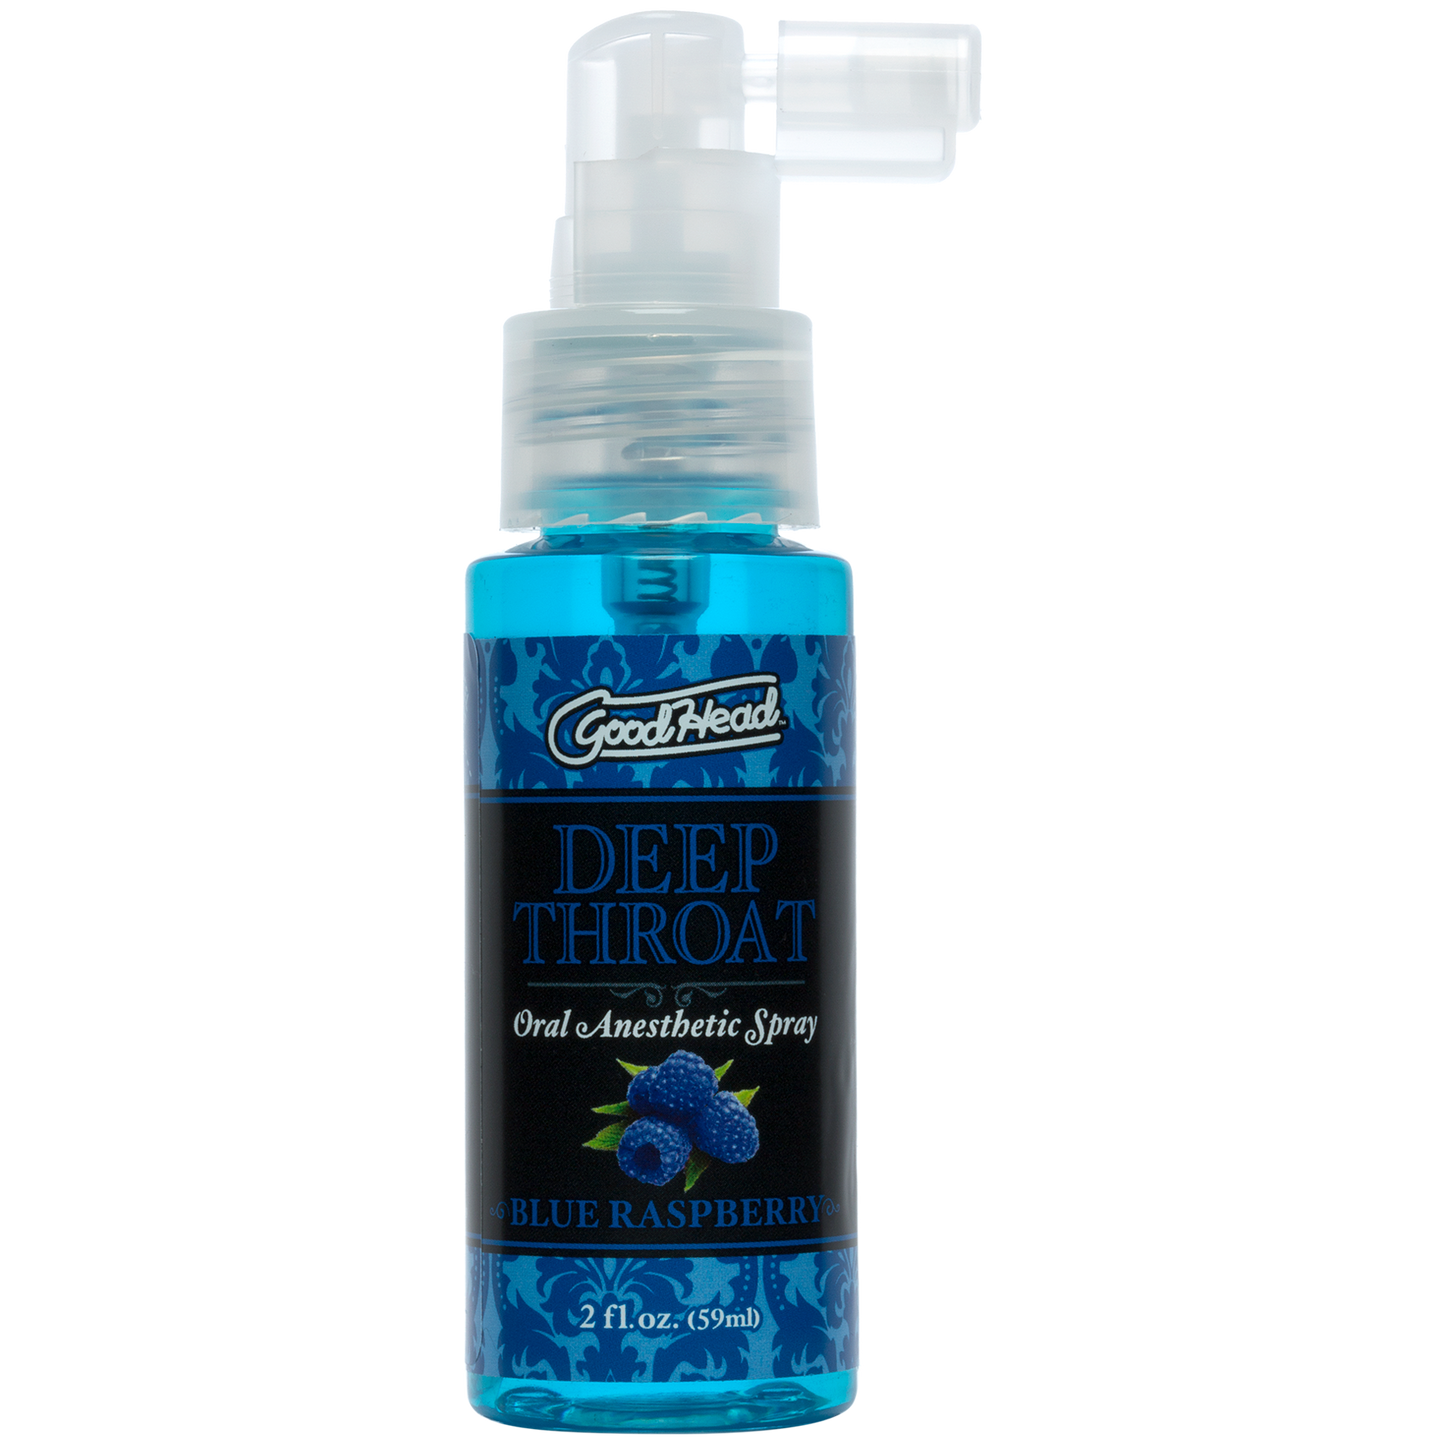 Deep Throat Oral Anesthetic Spray 2oz (blue raspberry).